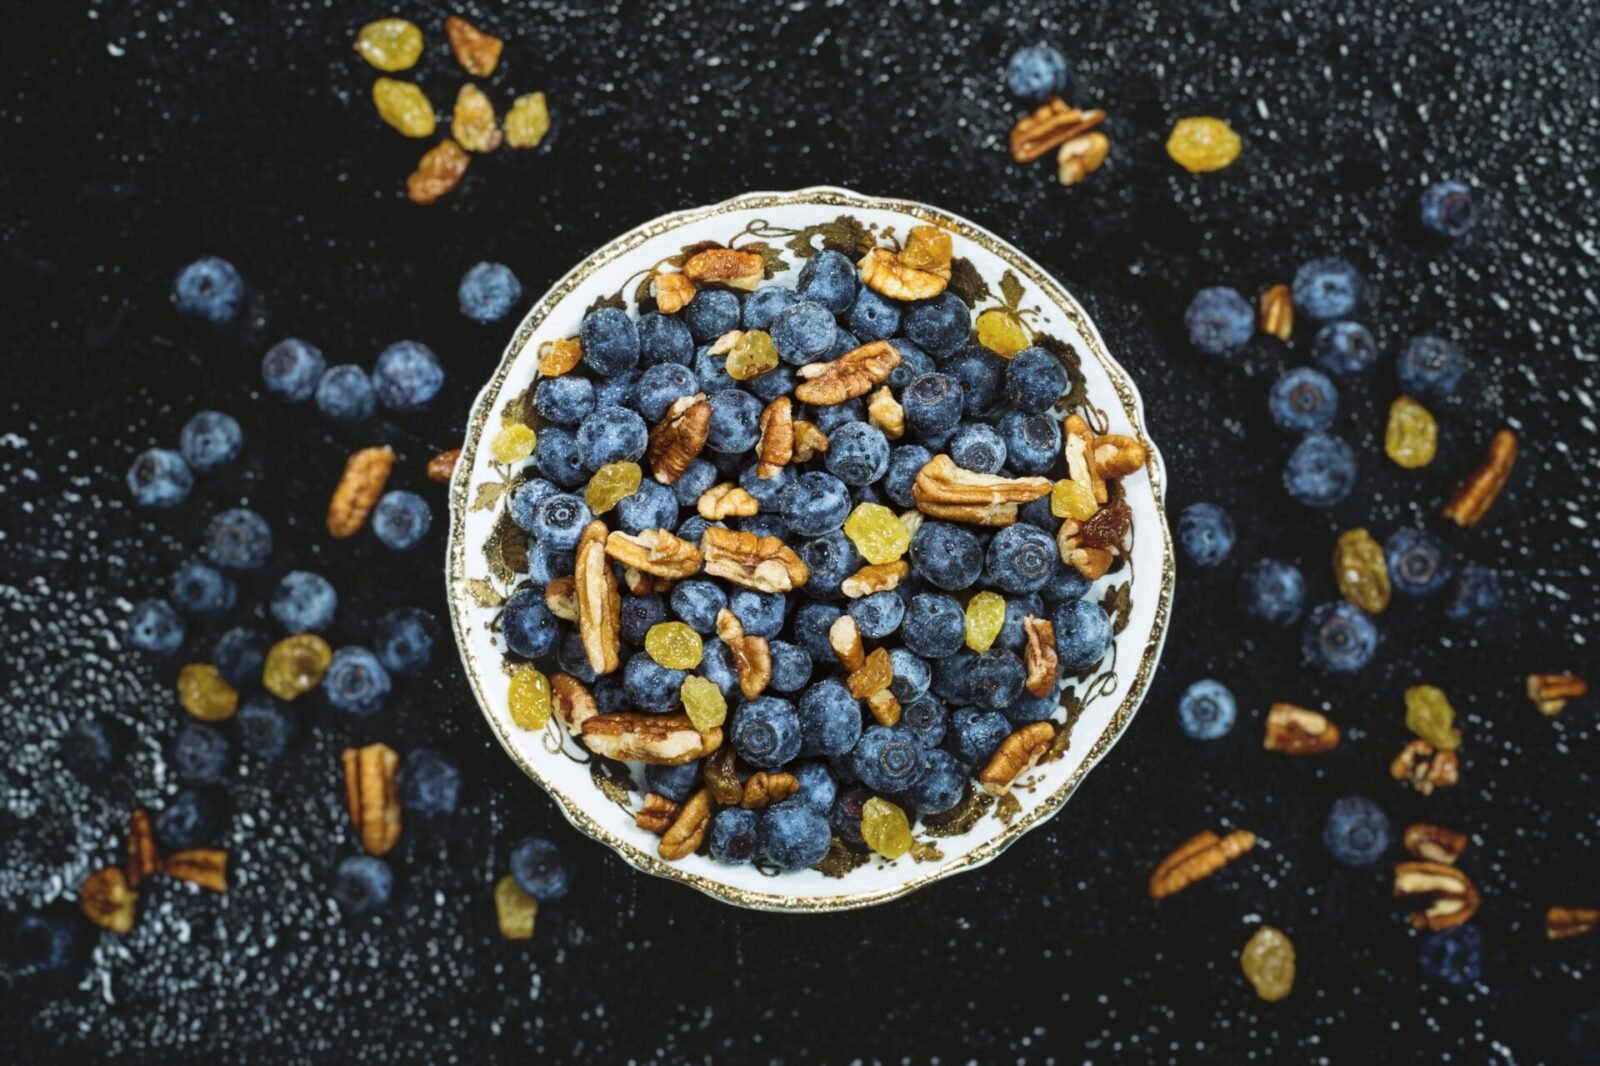 Photo by Tetyana Kovyrina: https://www.pexels.com/photo/top-view-photo-of-blueberries-2988229/